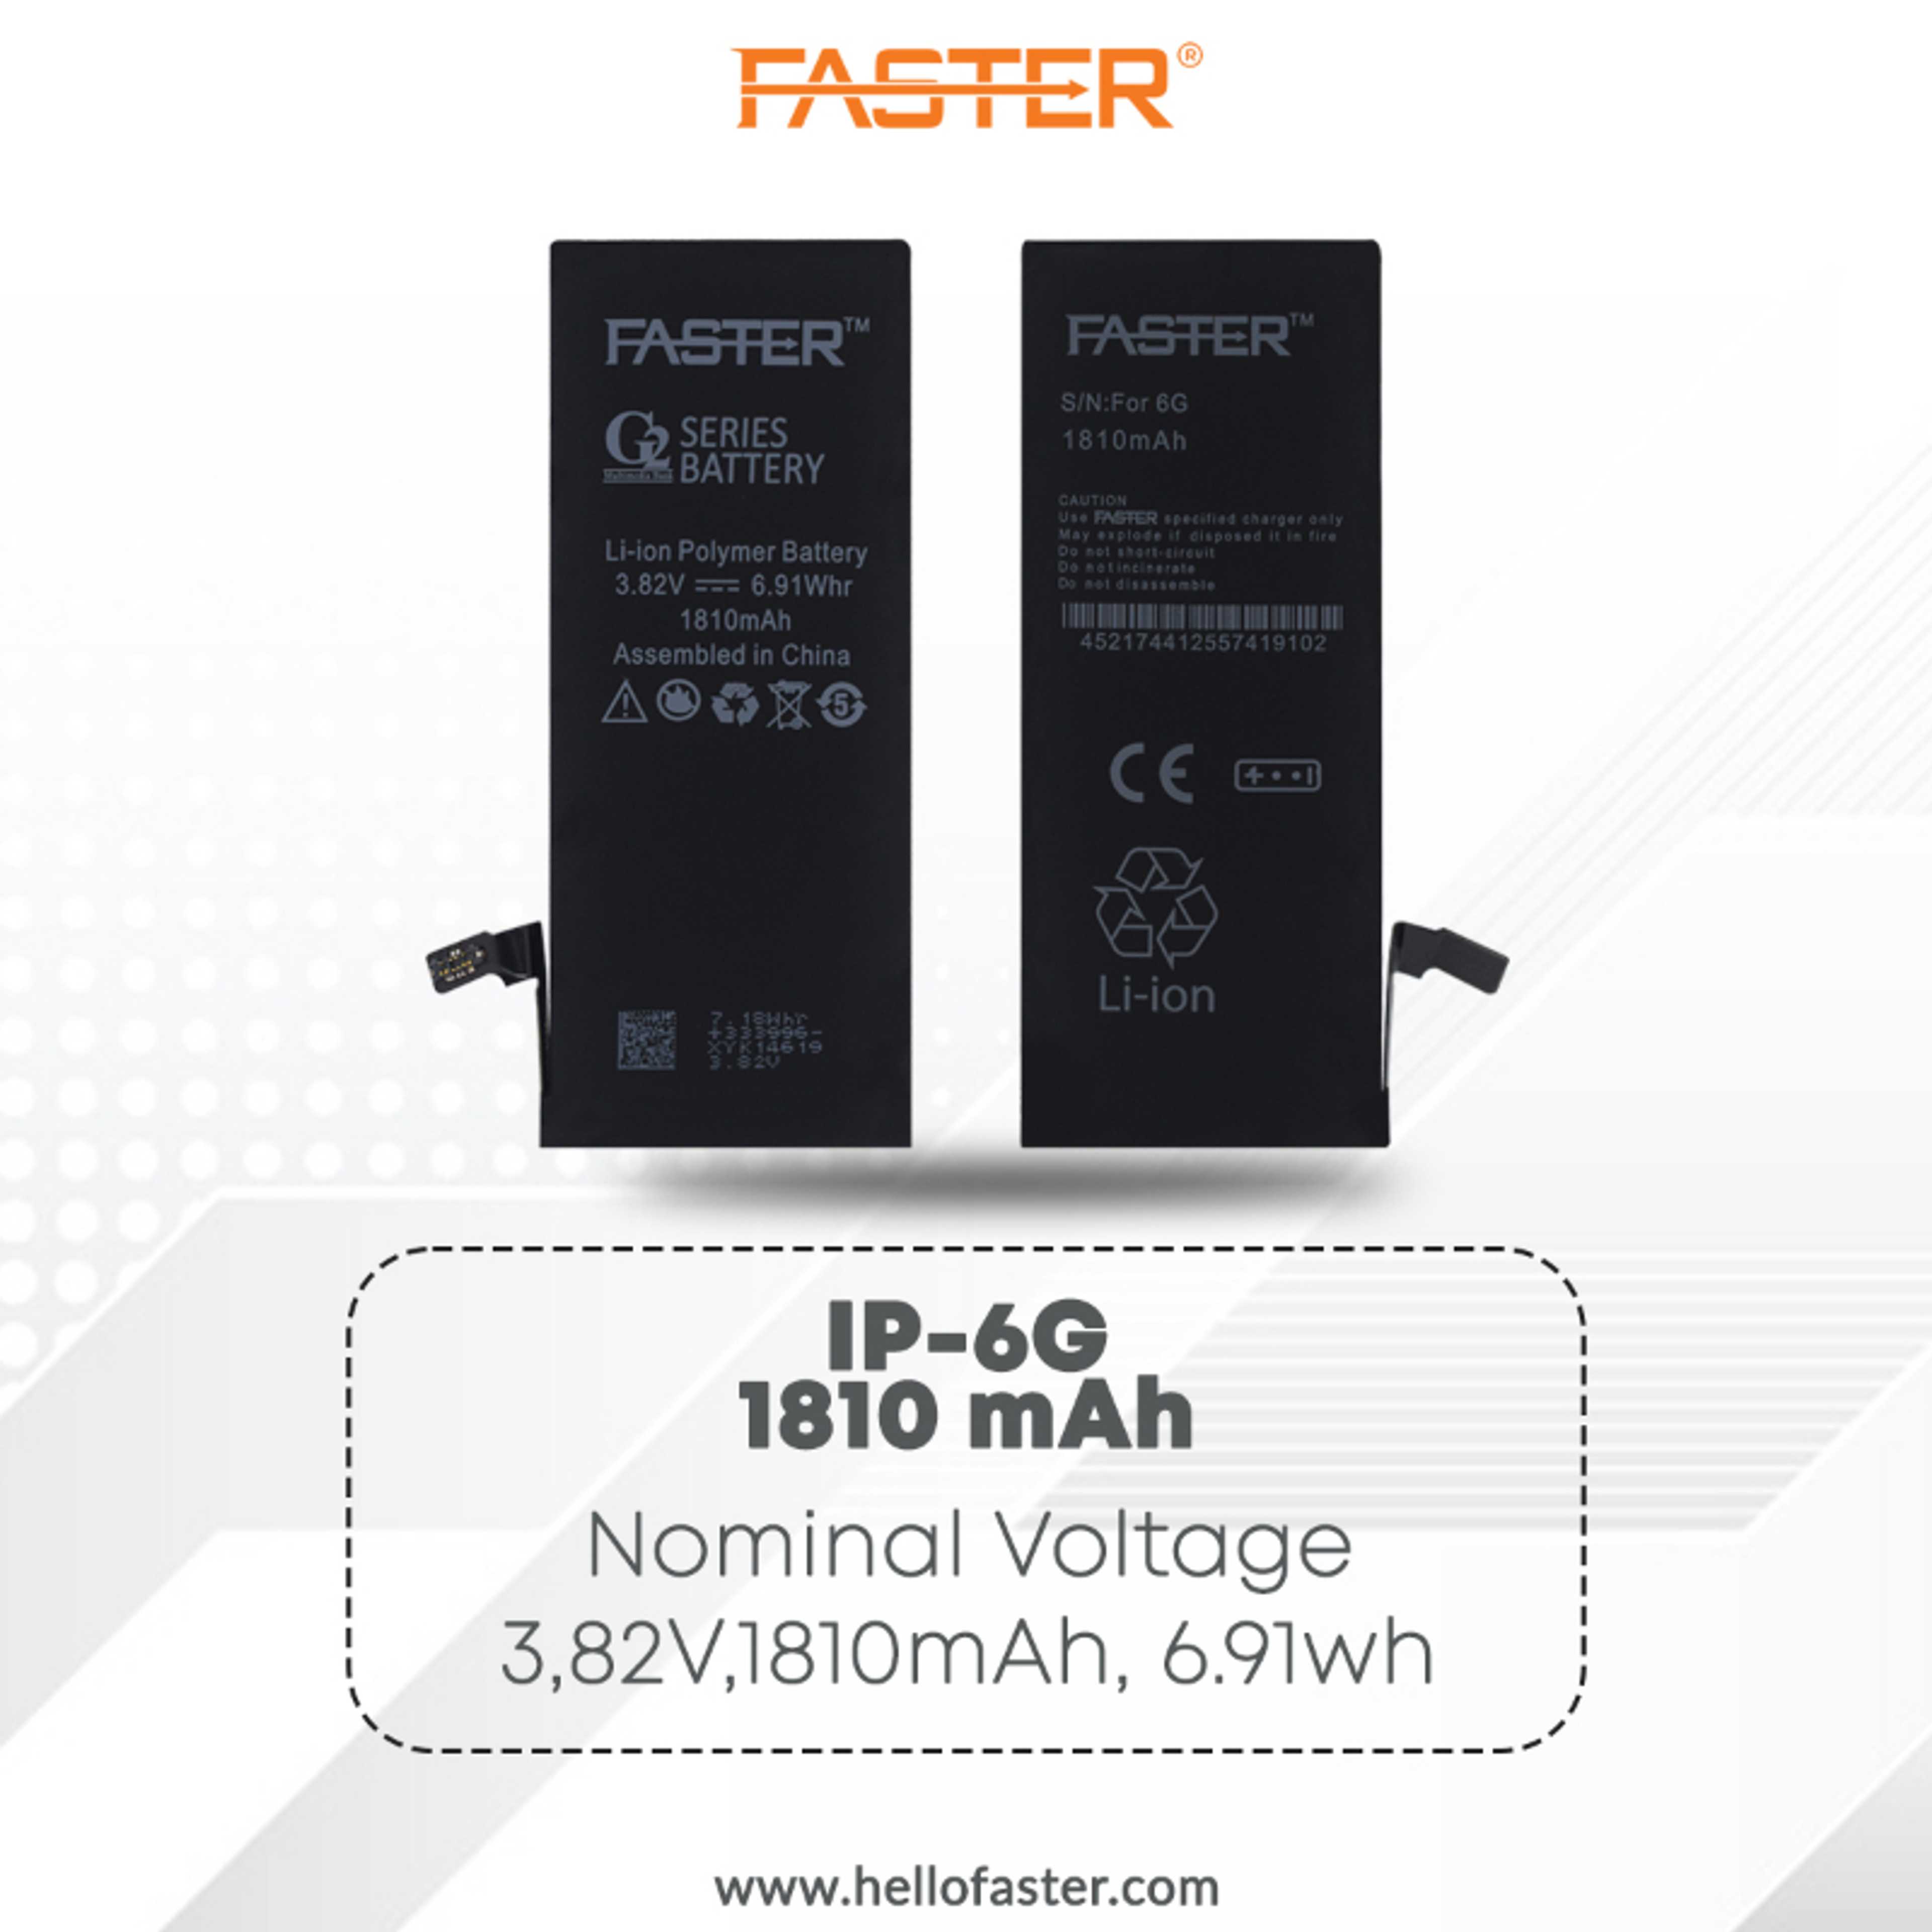 Faster Iphone 6 Battery 1810 mAh Capacity - Original Battery Iphone 6G - Li-ion Polymer Battery